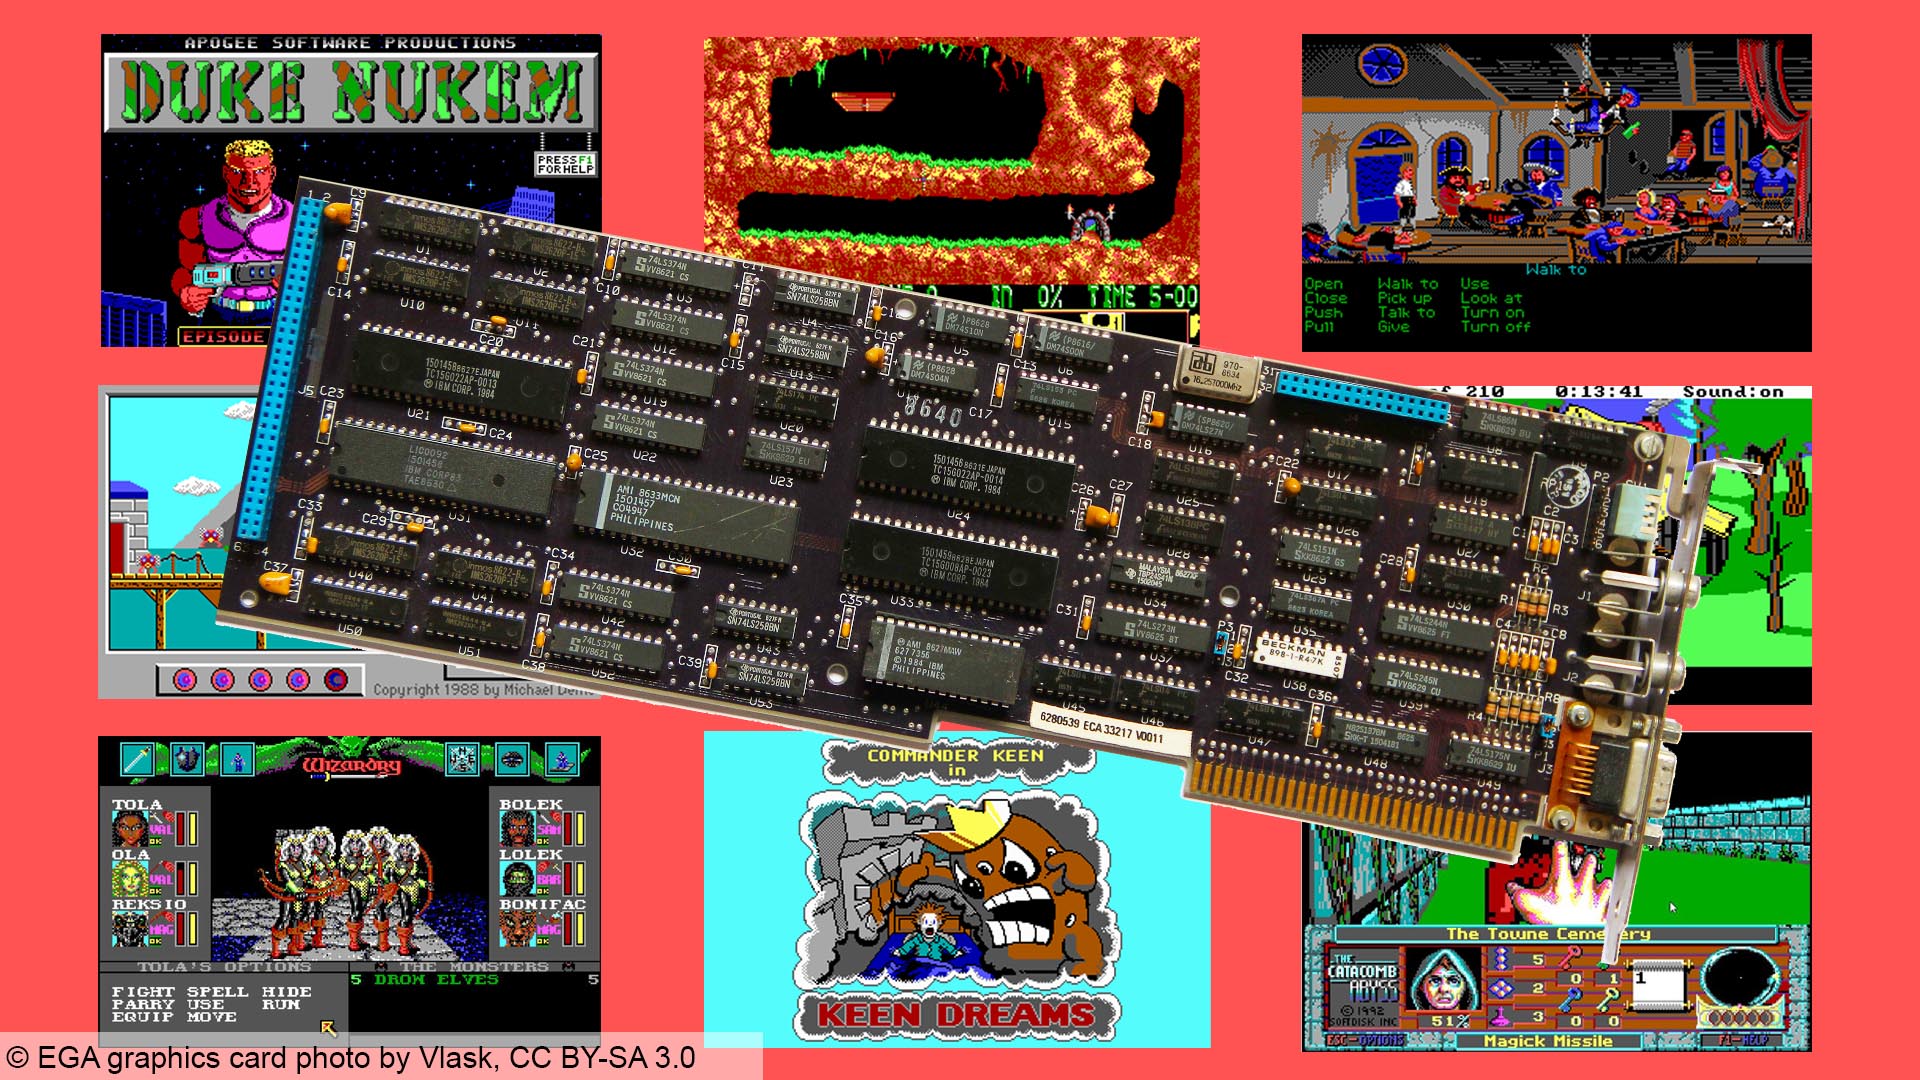 EGA graphics: Original IBM EGa graphics card with game screenshots